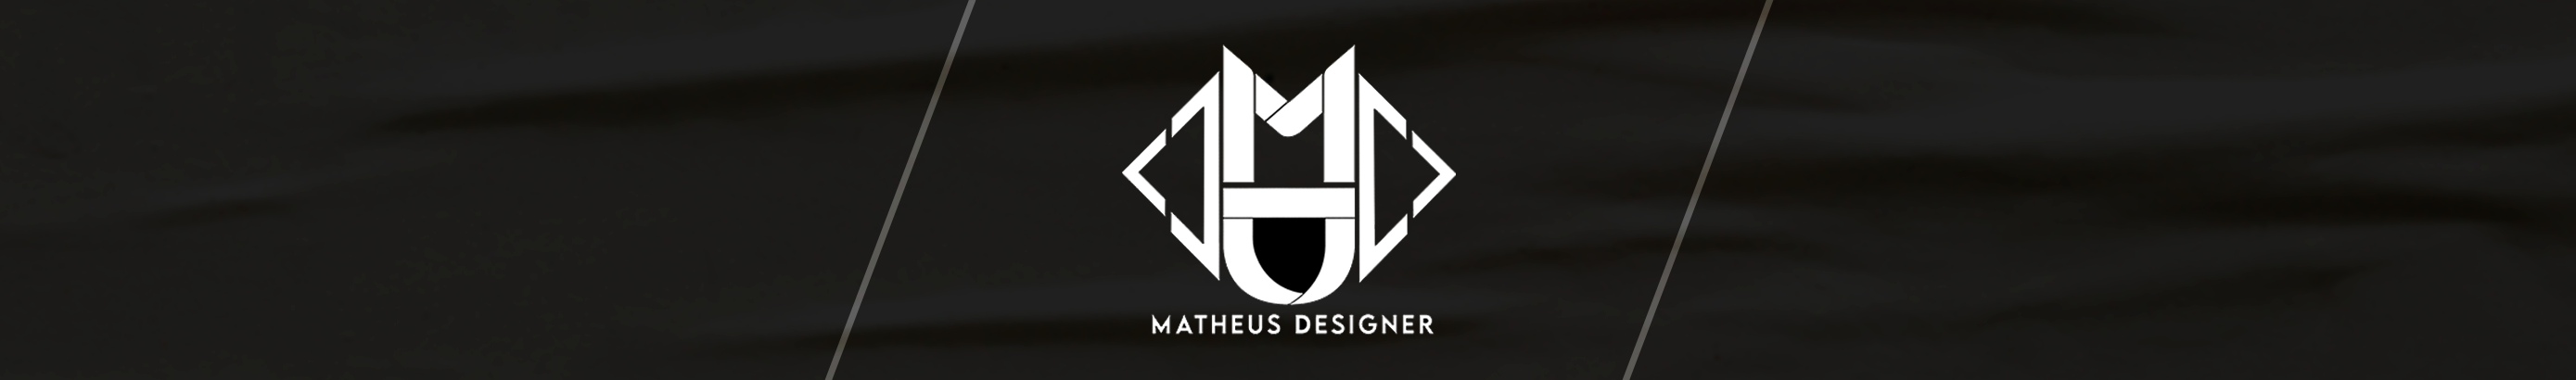 Matheus Designer's profile banner